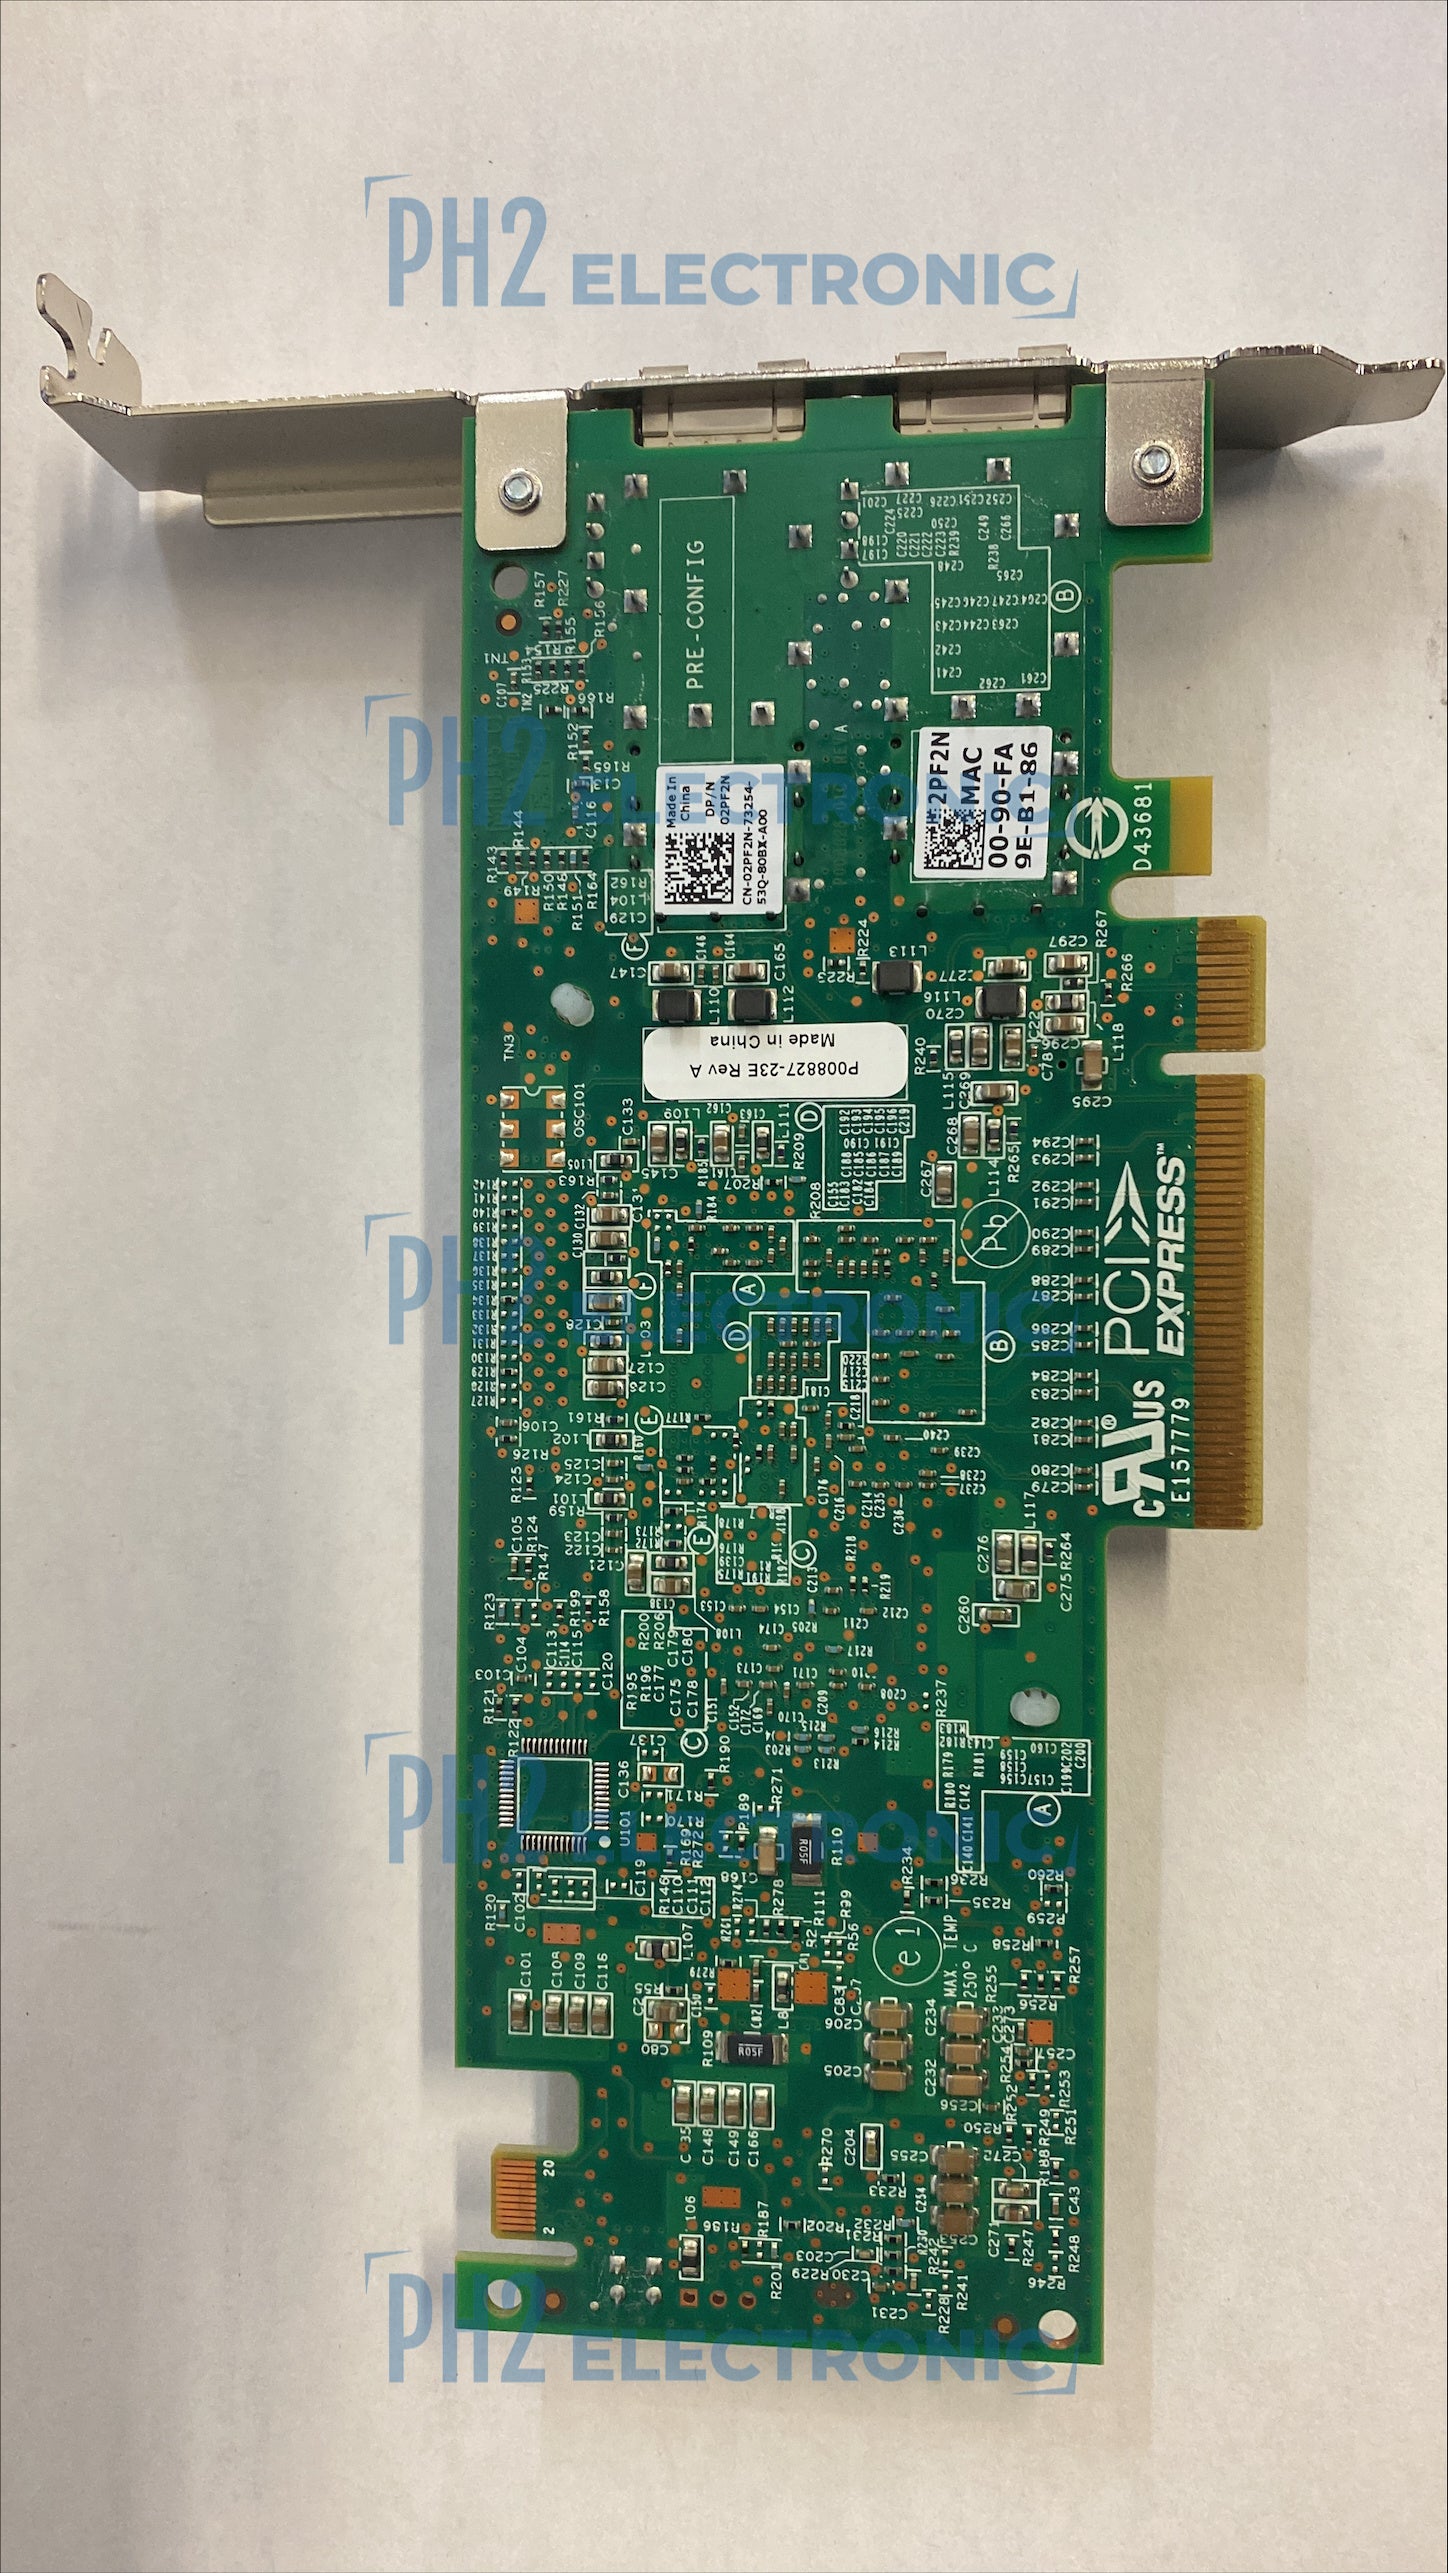 DELL 	2PF2N	02PF2N		Emulex Dual Port 10Gb SFP Network Adapter